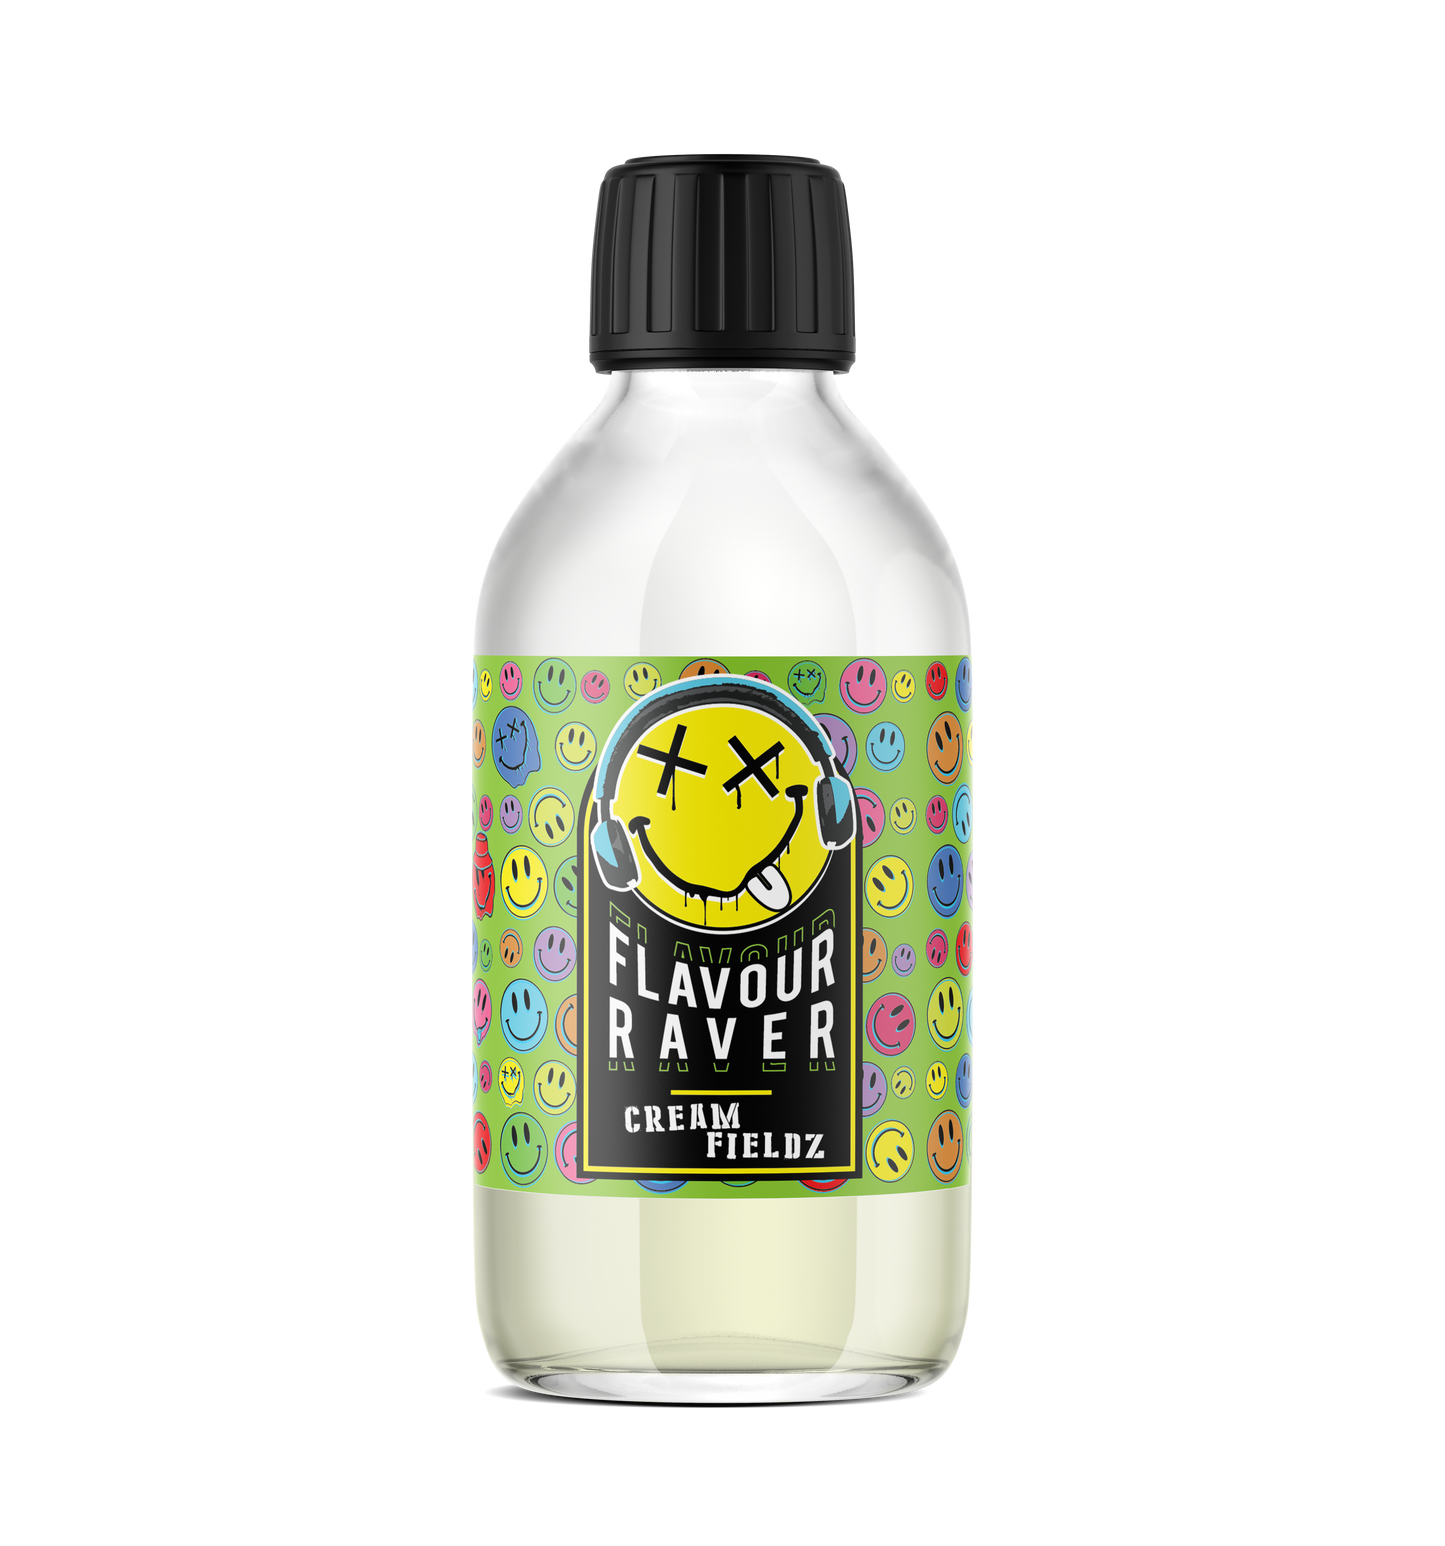 Flavour Raver Cream Fieldz 200ML Shortfill - The Ace Of Vapez